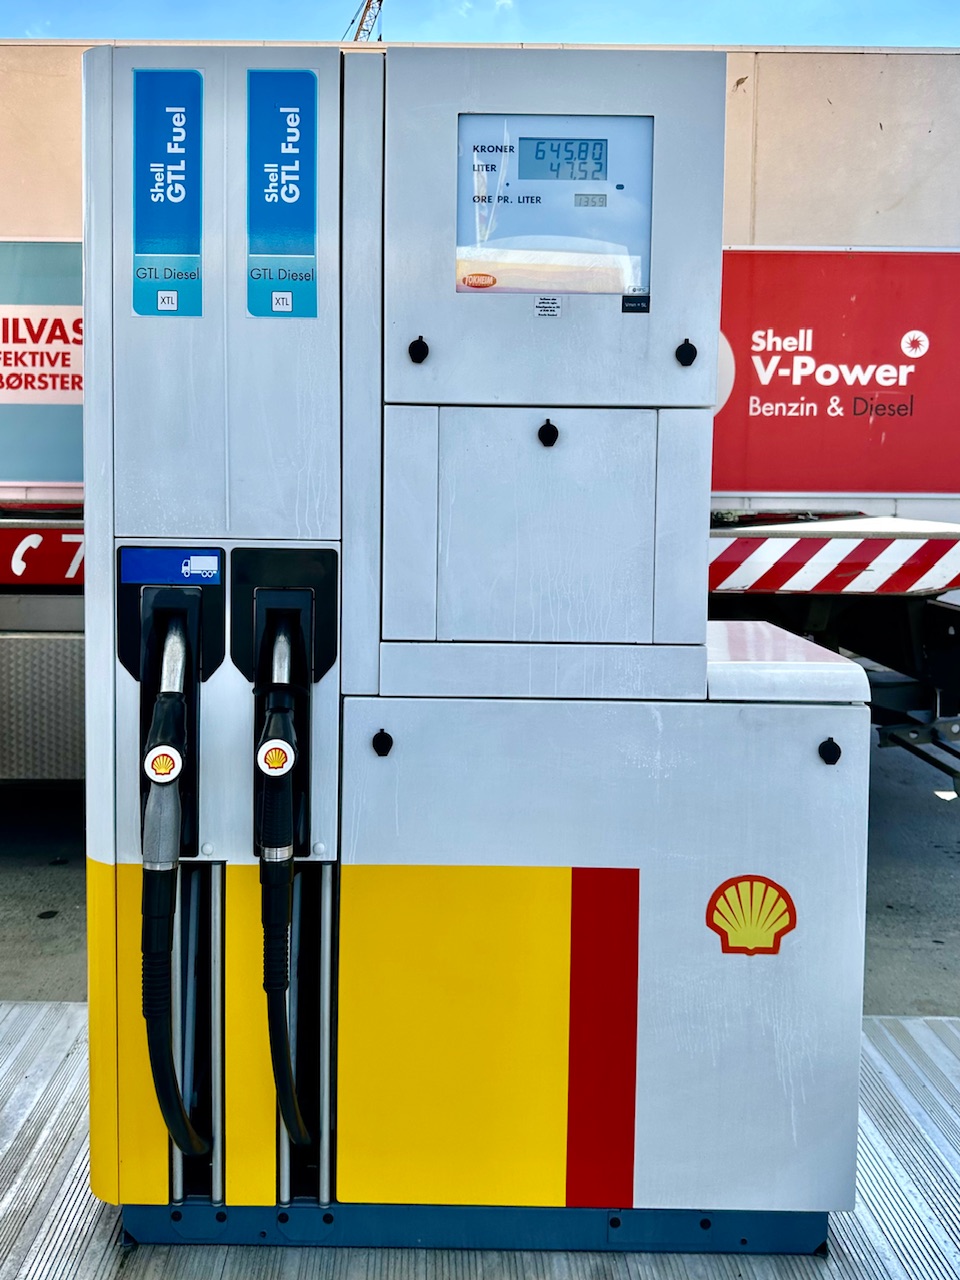 GTL Diesel pump at a Danish Shell station